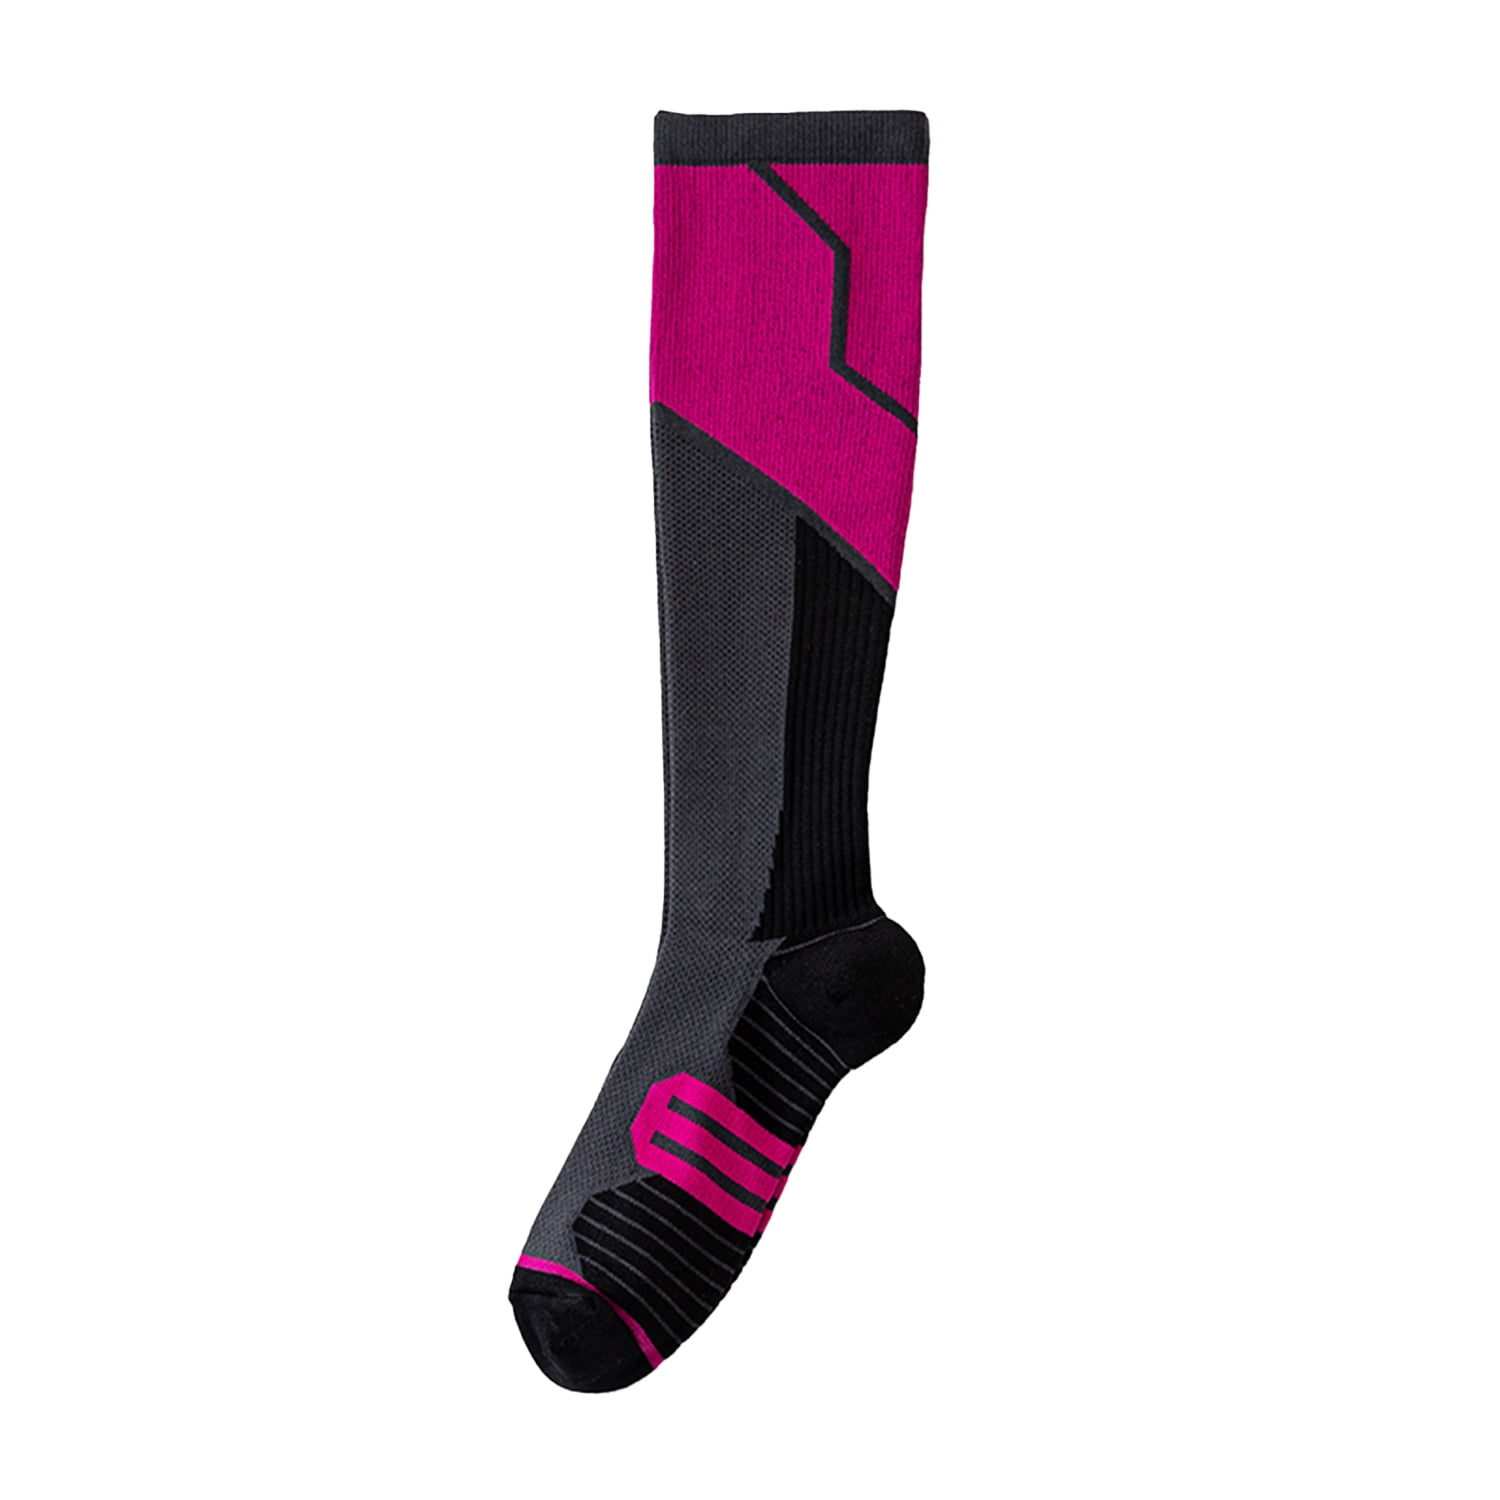 Hehanda Women's Outdoor Sports Compression Socks - Jump Rope Fitness Calf  Socks 